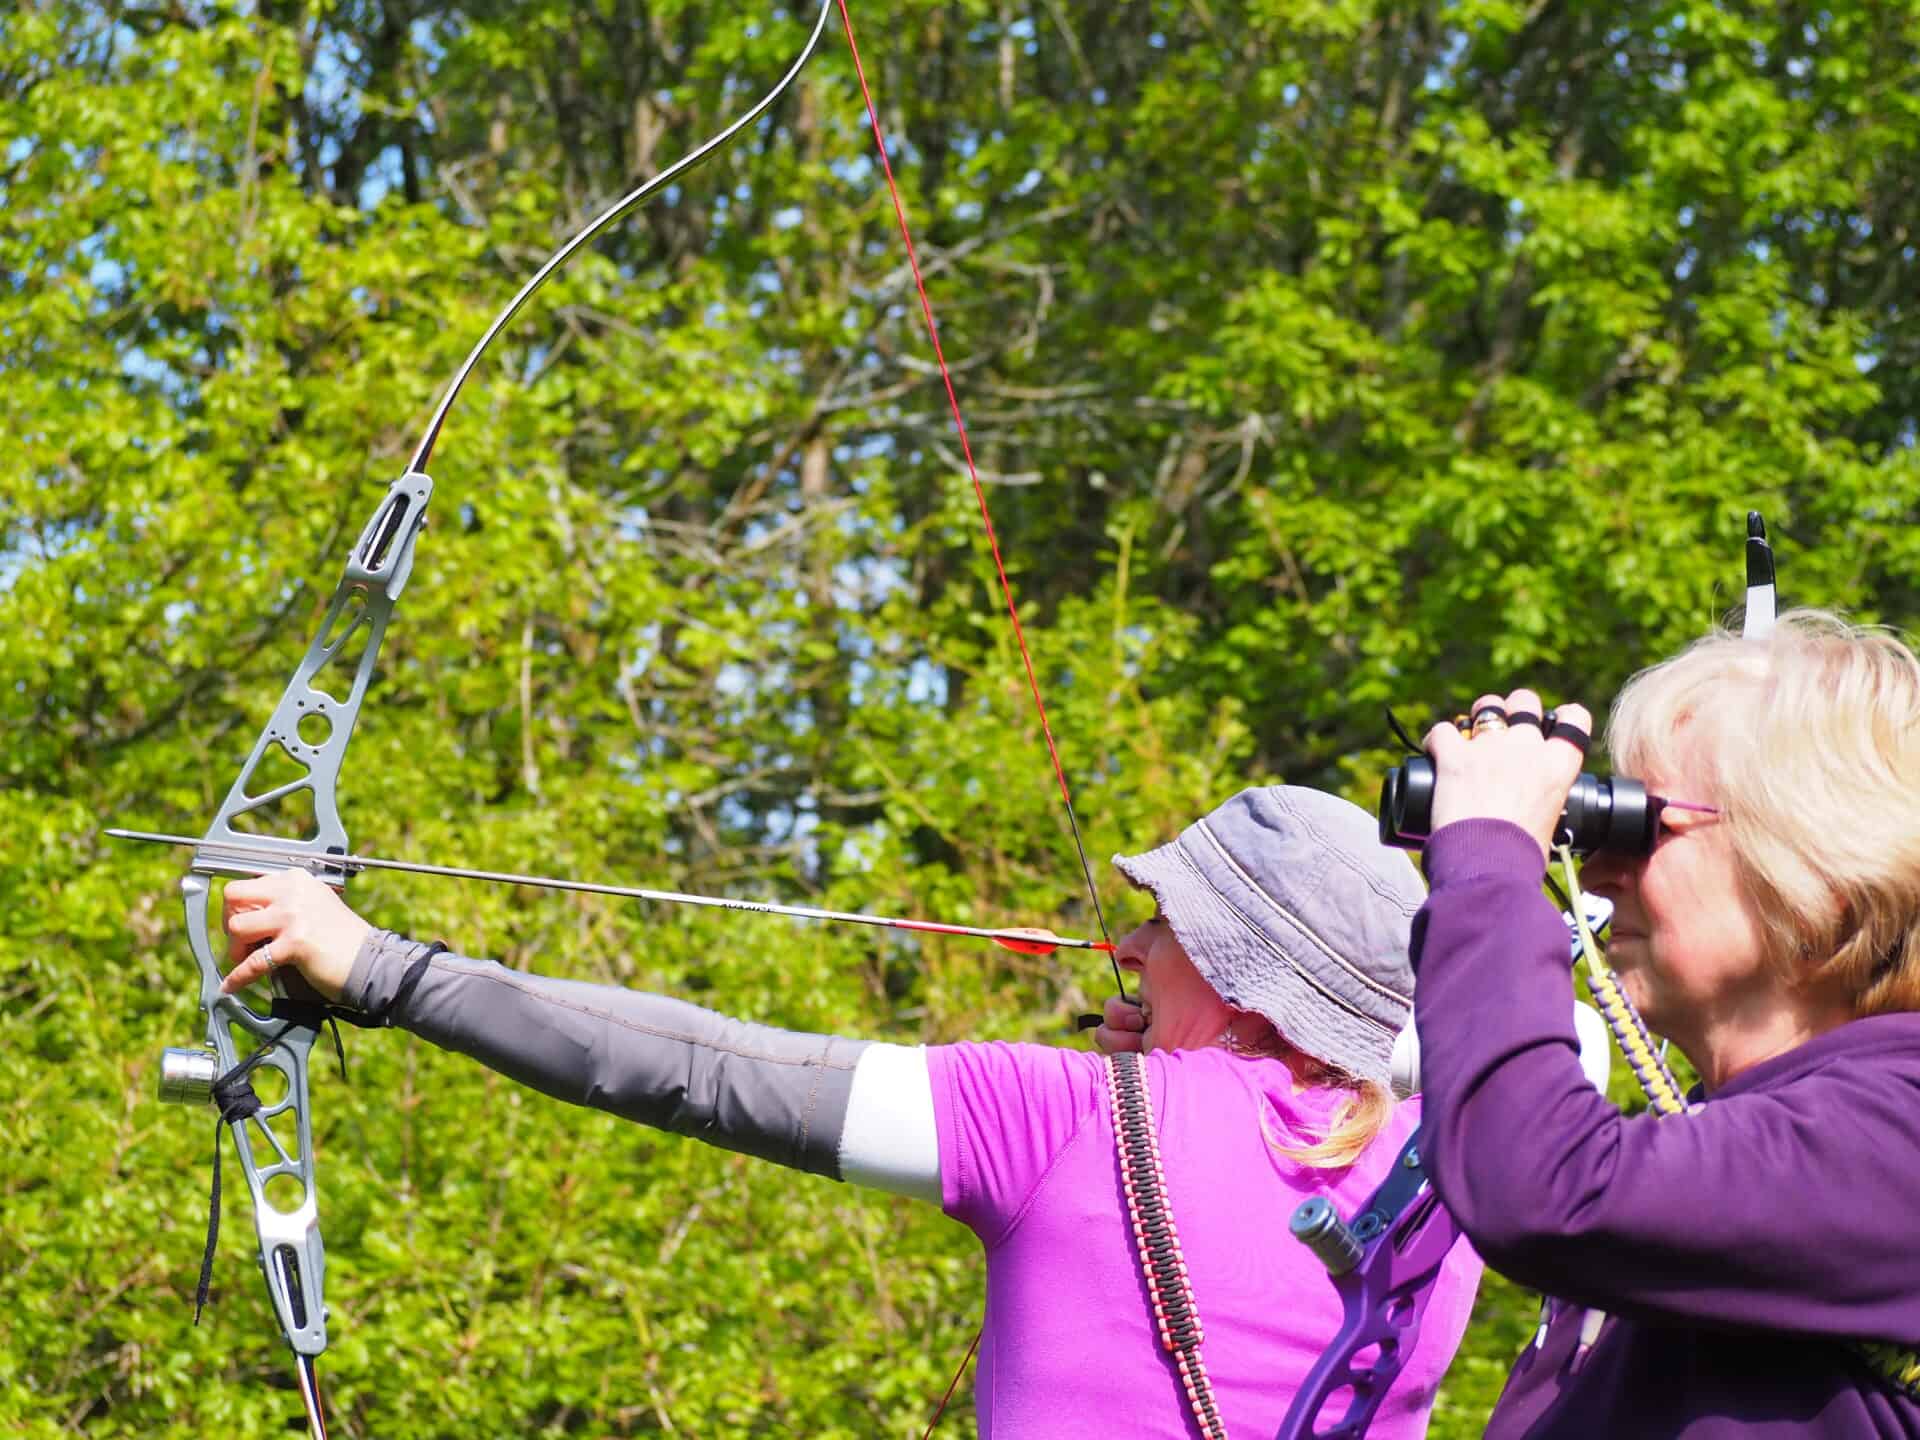 Stay sun-safe for Start Archery Week!